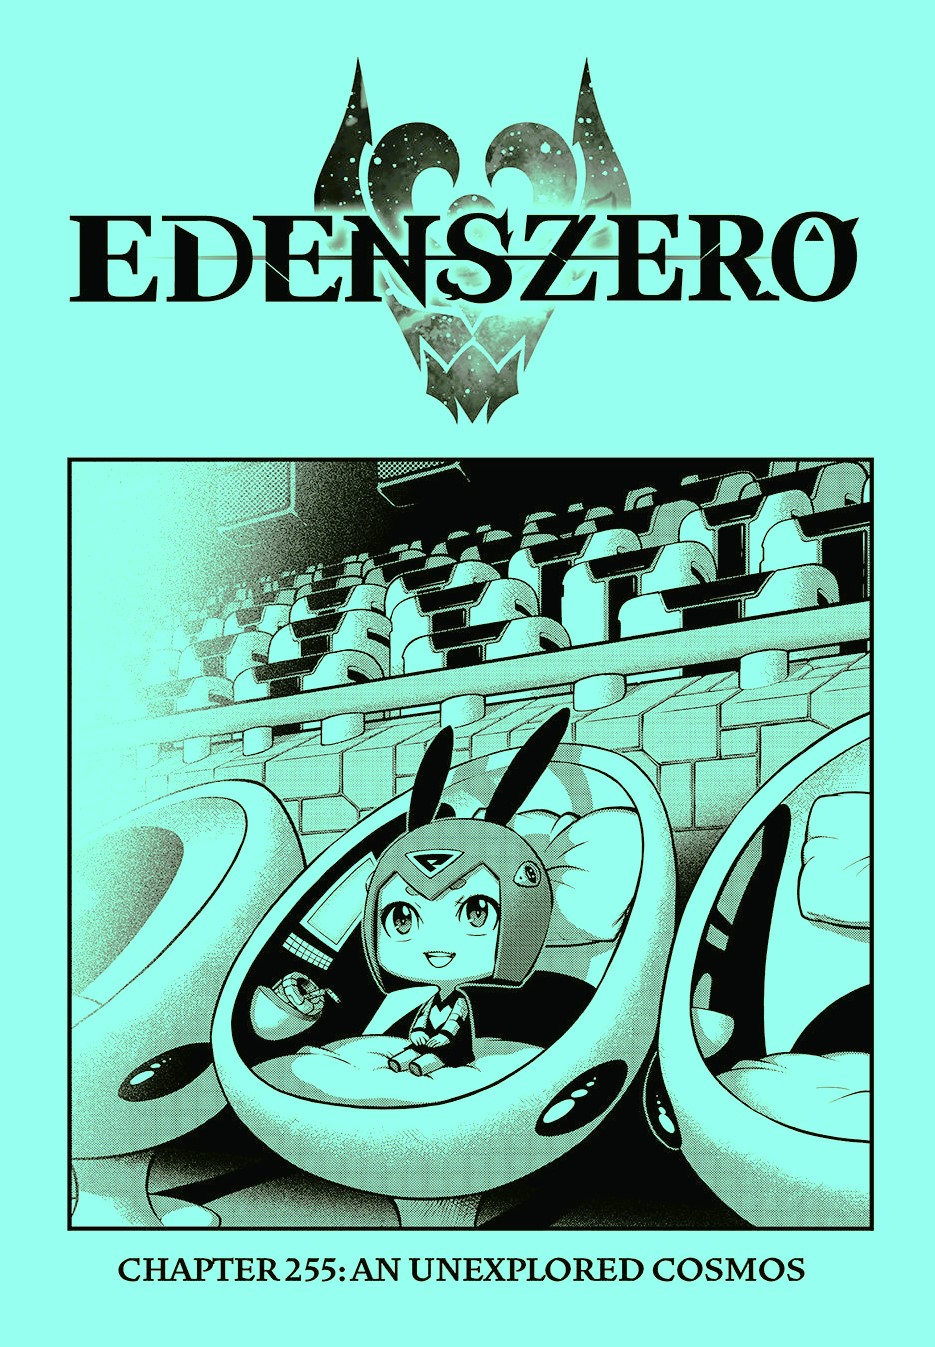 Edens Zero Chapter 255 SHORT REVIEW